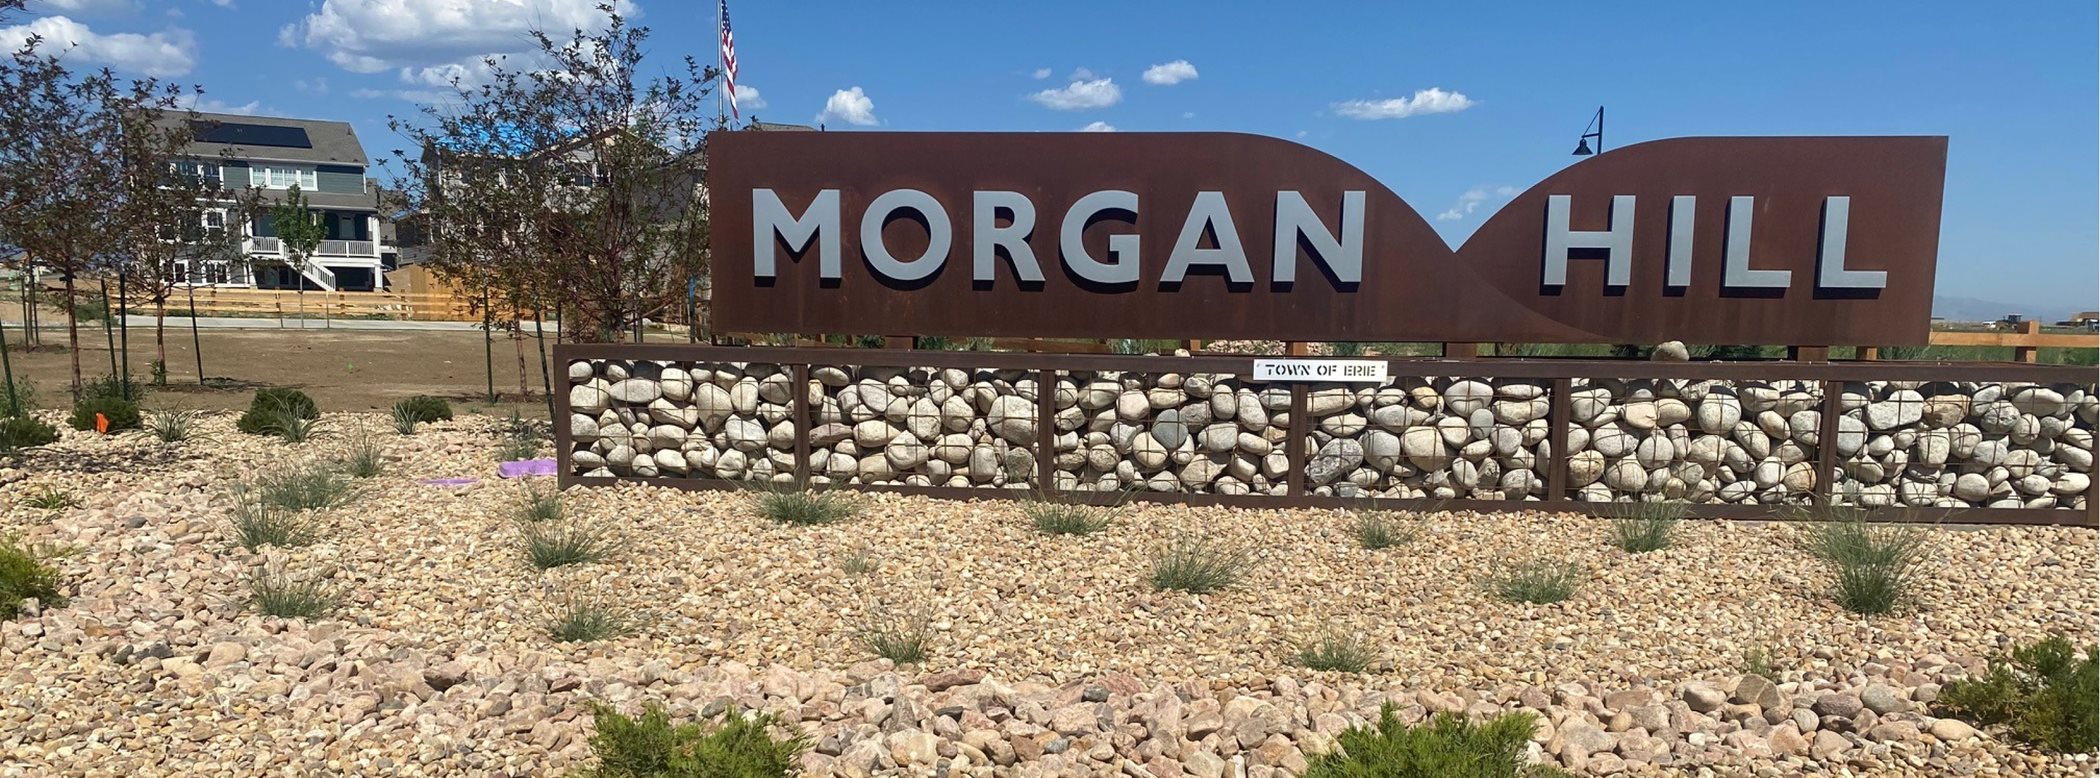 Morgan Hill Monument Entrance Sign